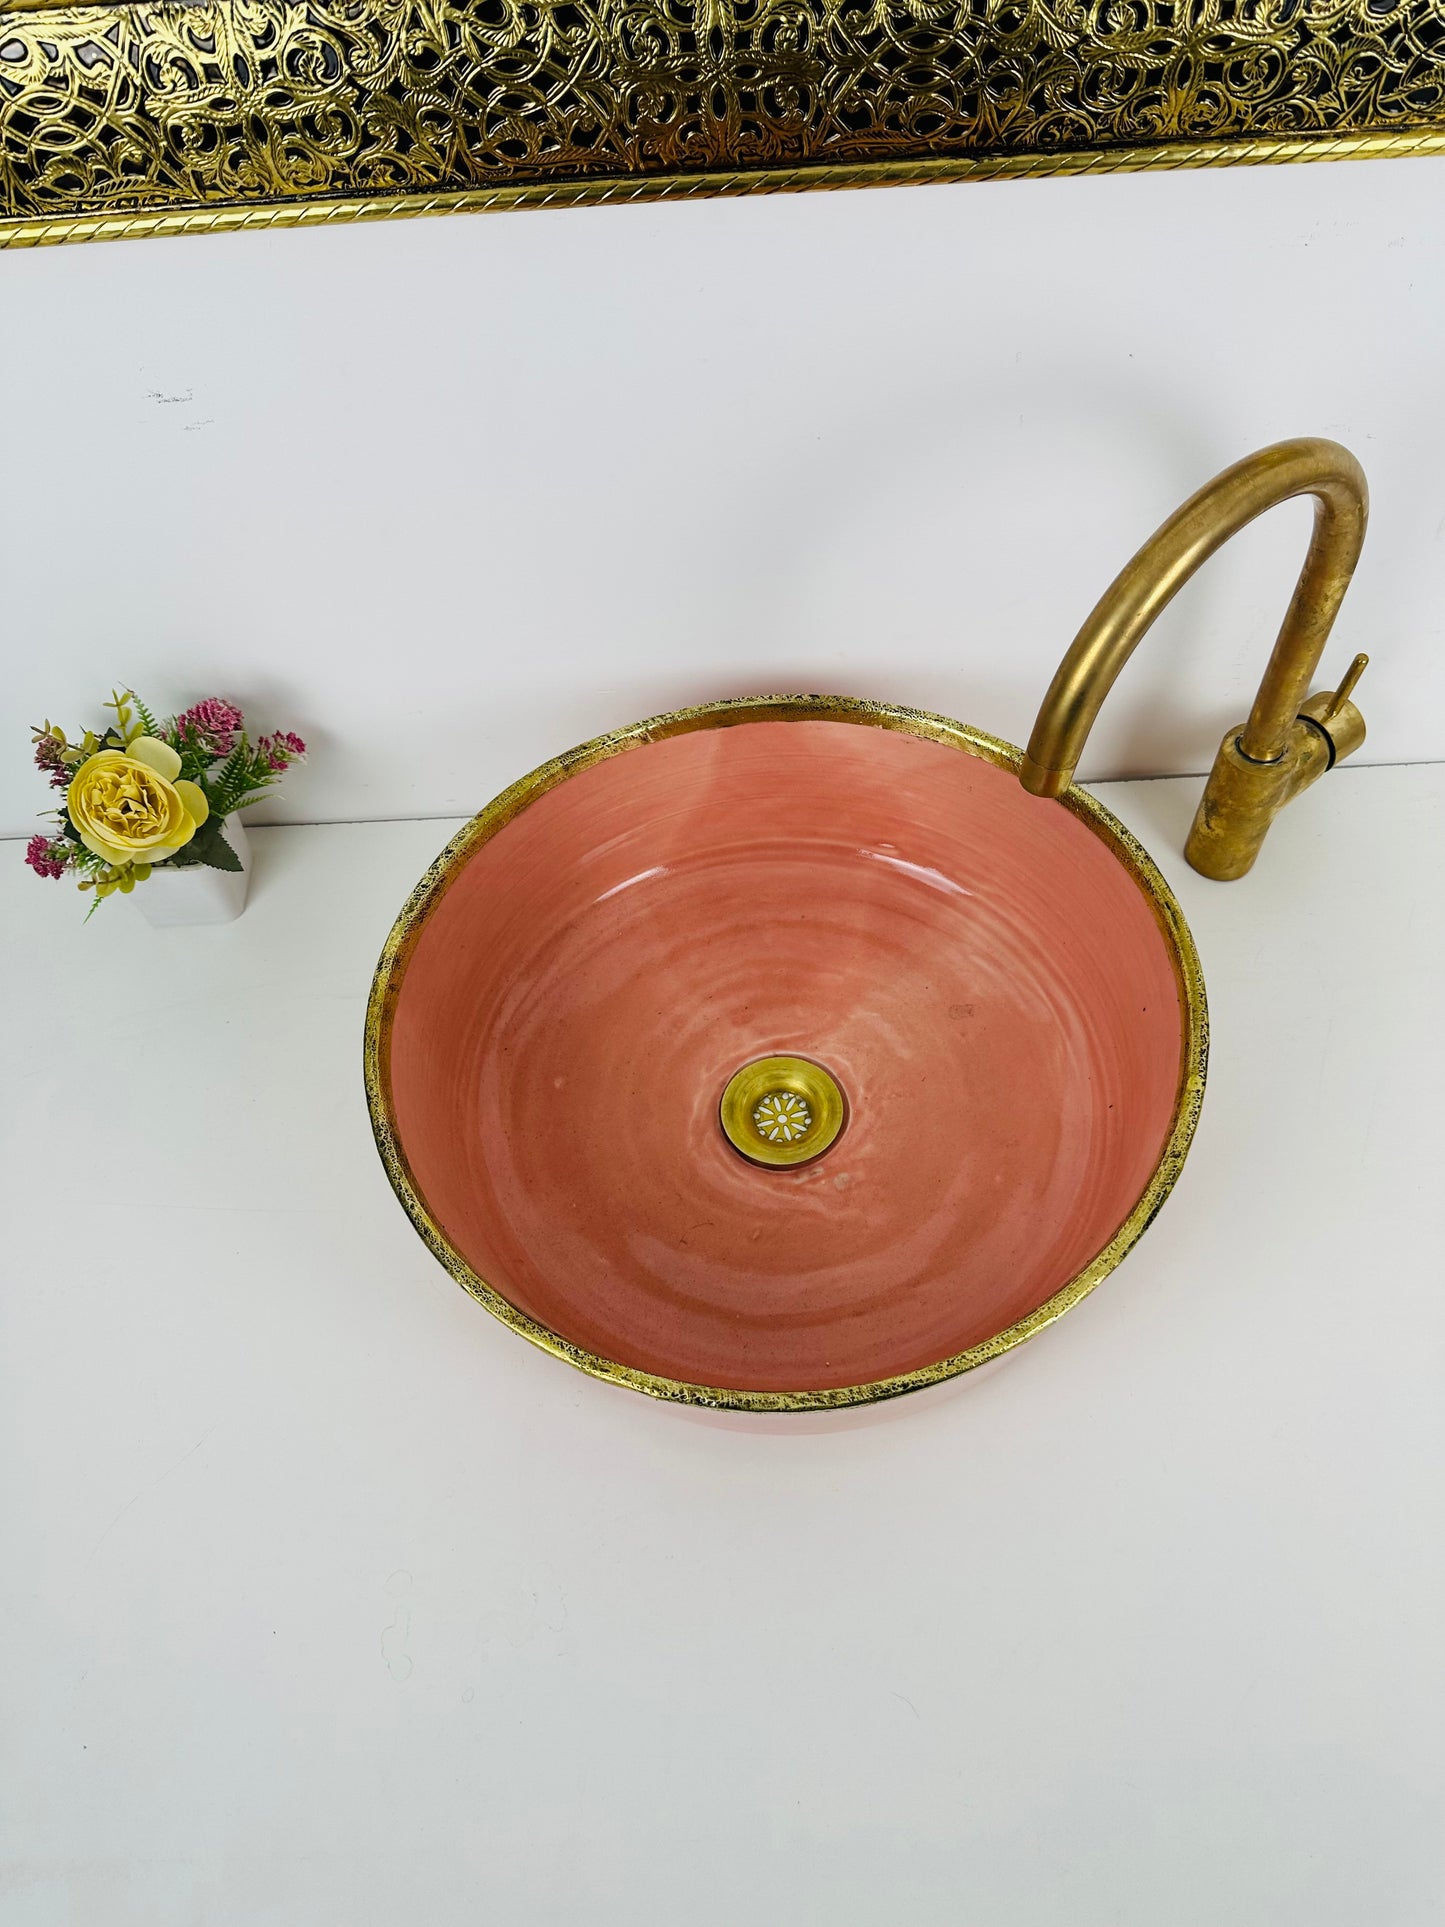 light orange vessel 100% handmade/hand painted - brass rimmed basin